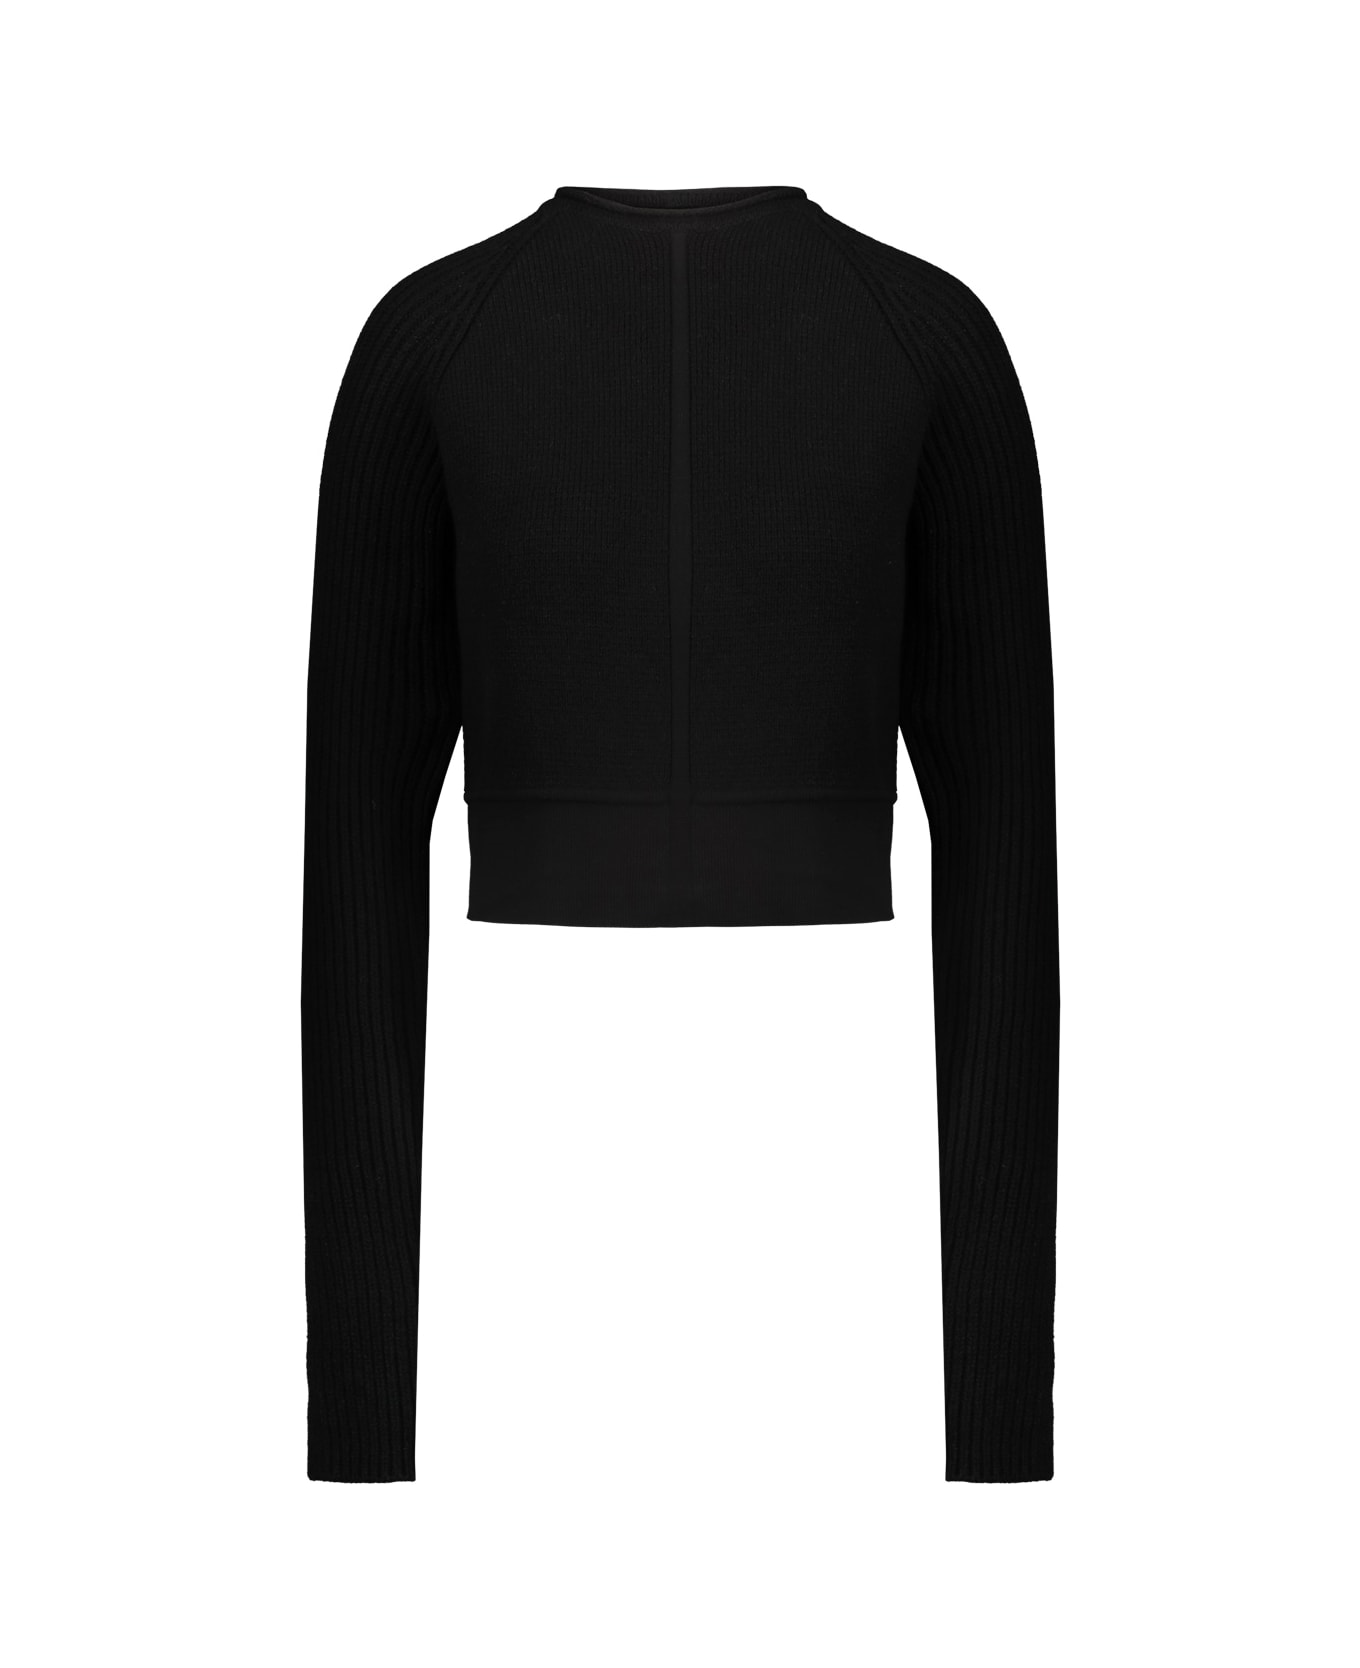 Rick Owens Cachemere Sweater - Black ニットウェア